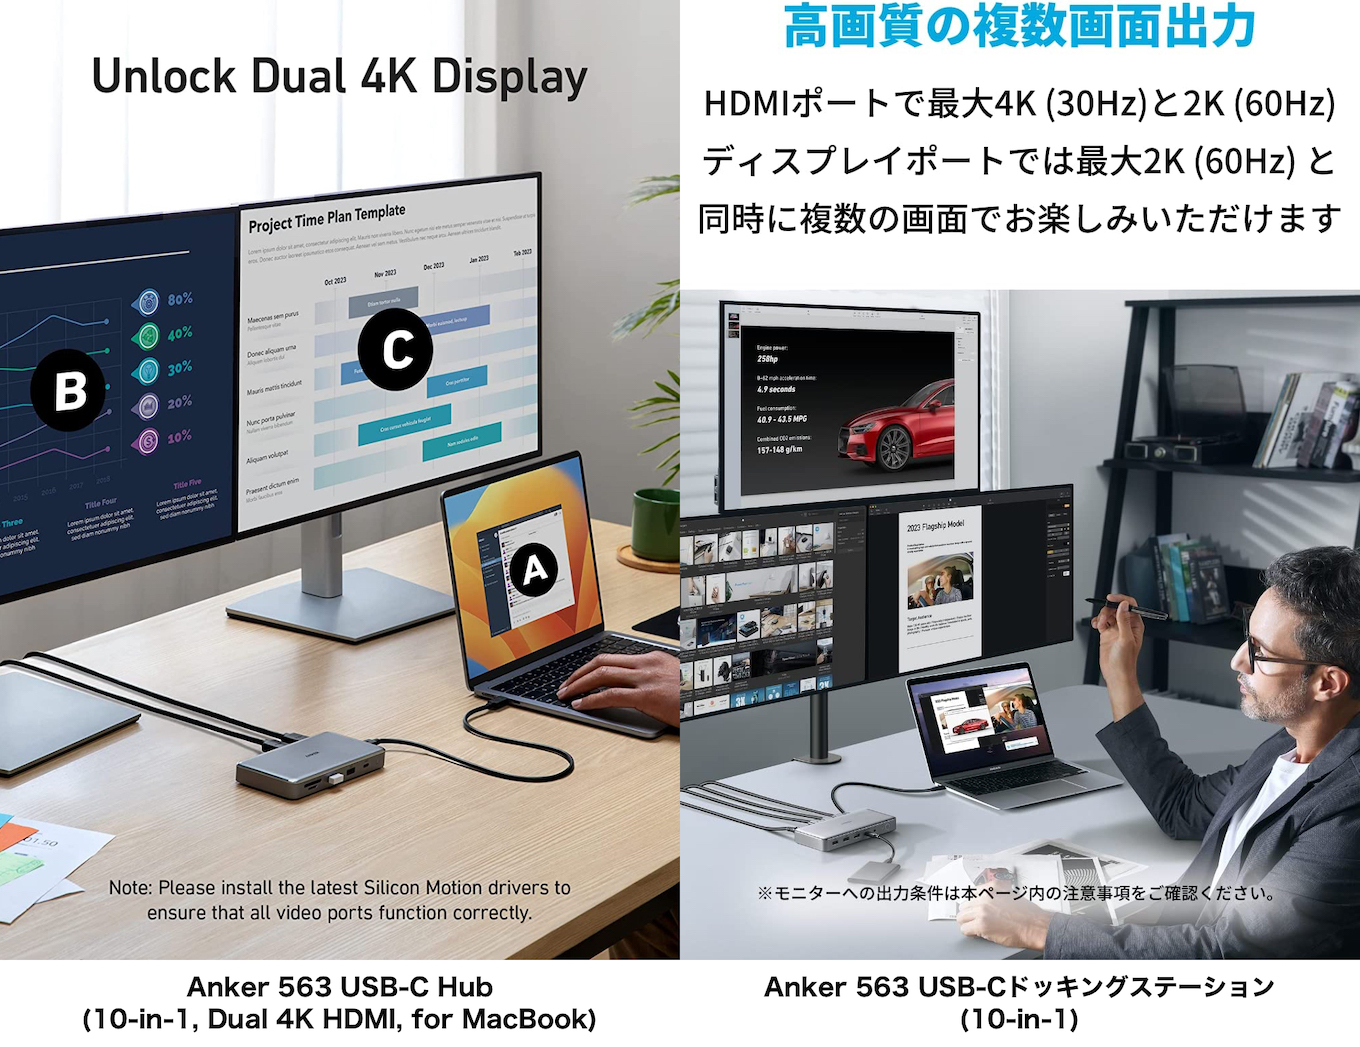 Anker 563 USB-C Hub (10-in-1, Dual 4K HDMI, for MacBook)とAnker 563 USB-C ドッキングステーション (10-in-1)